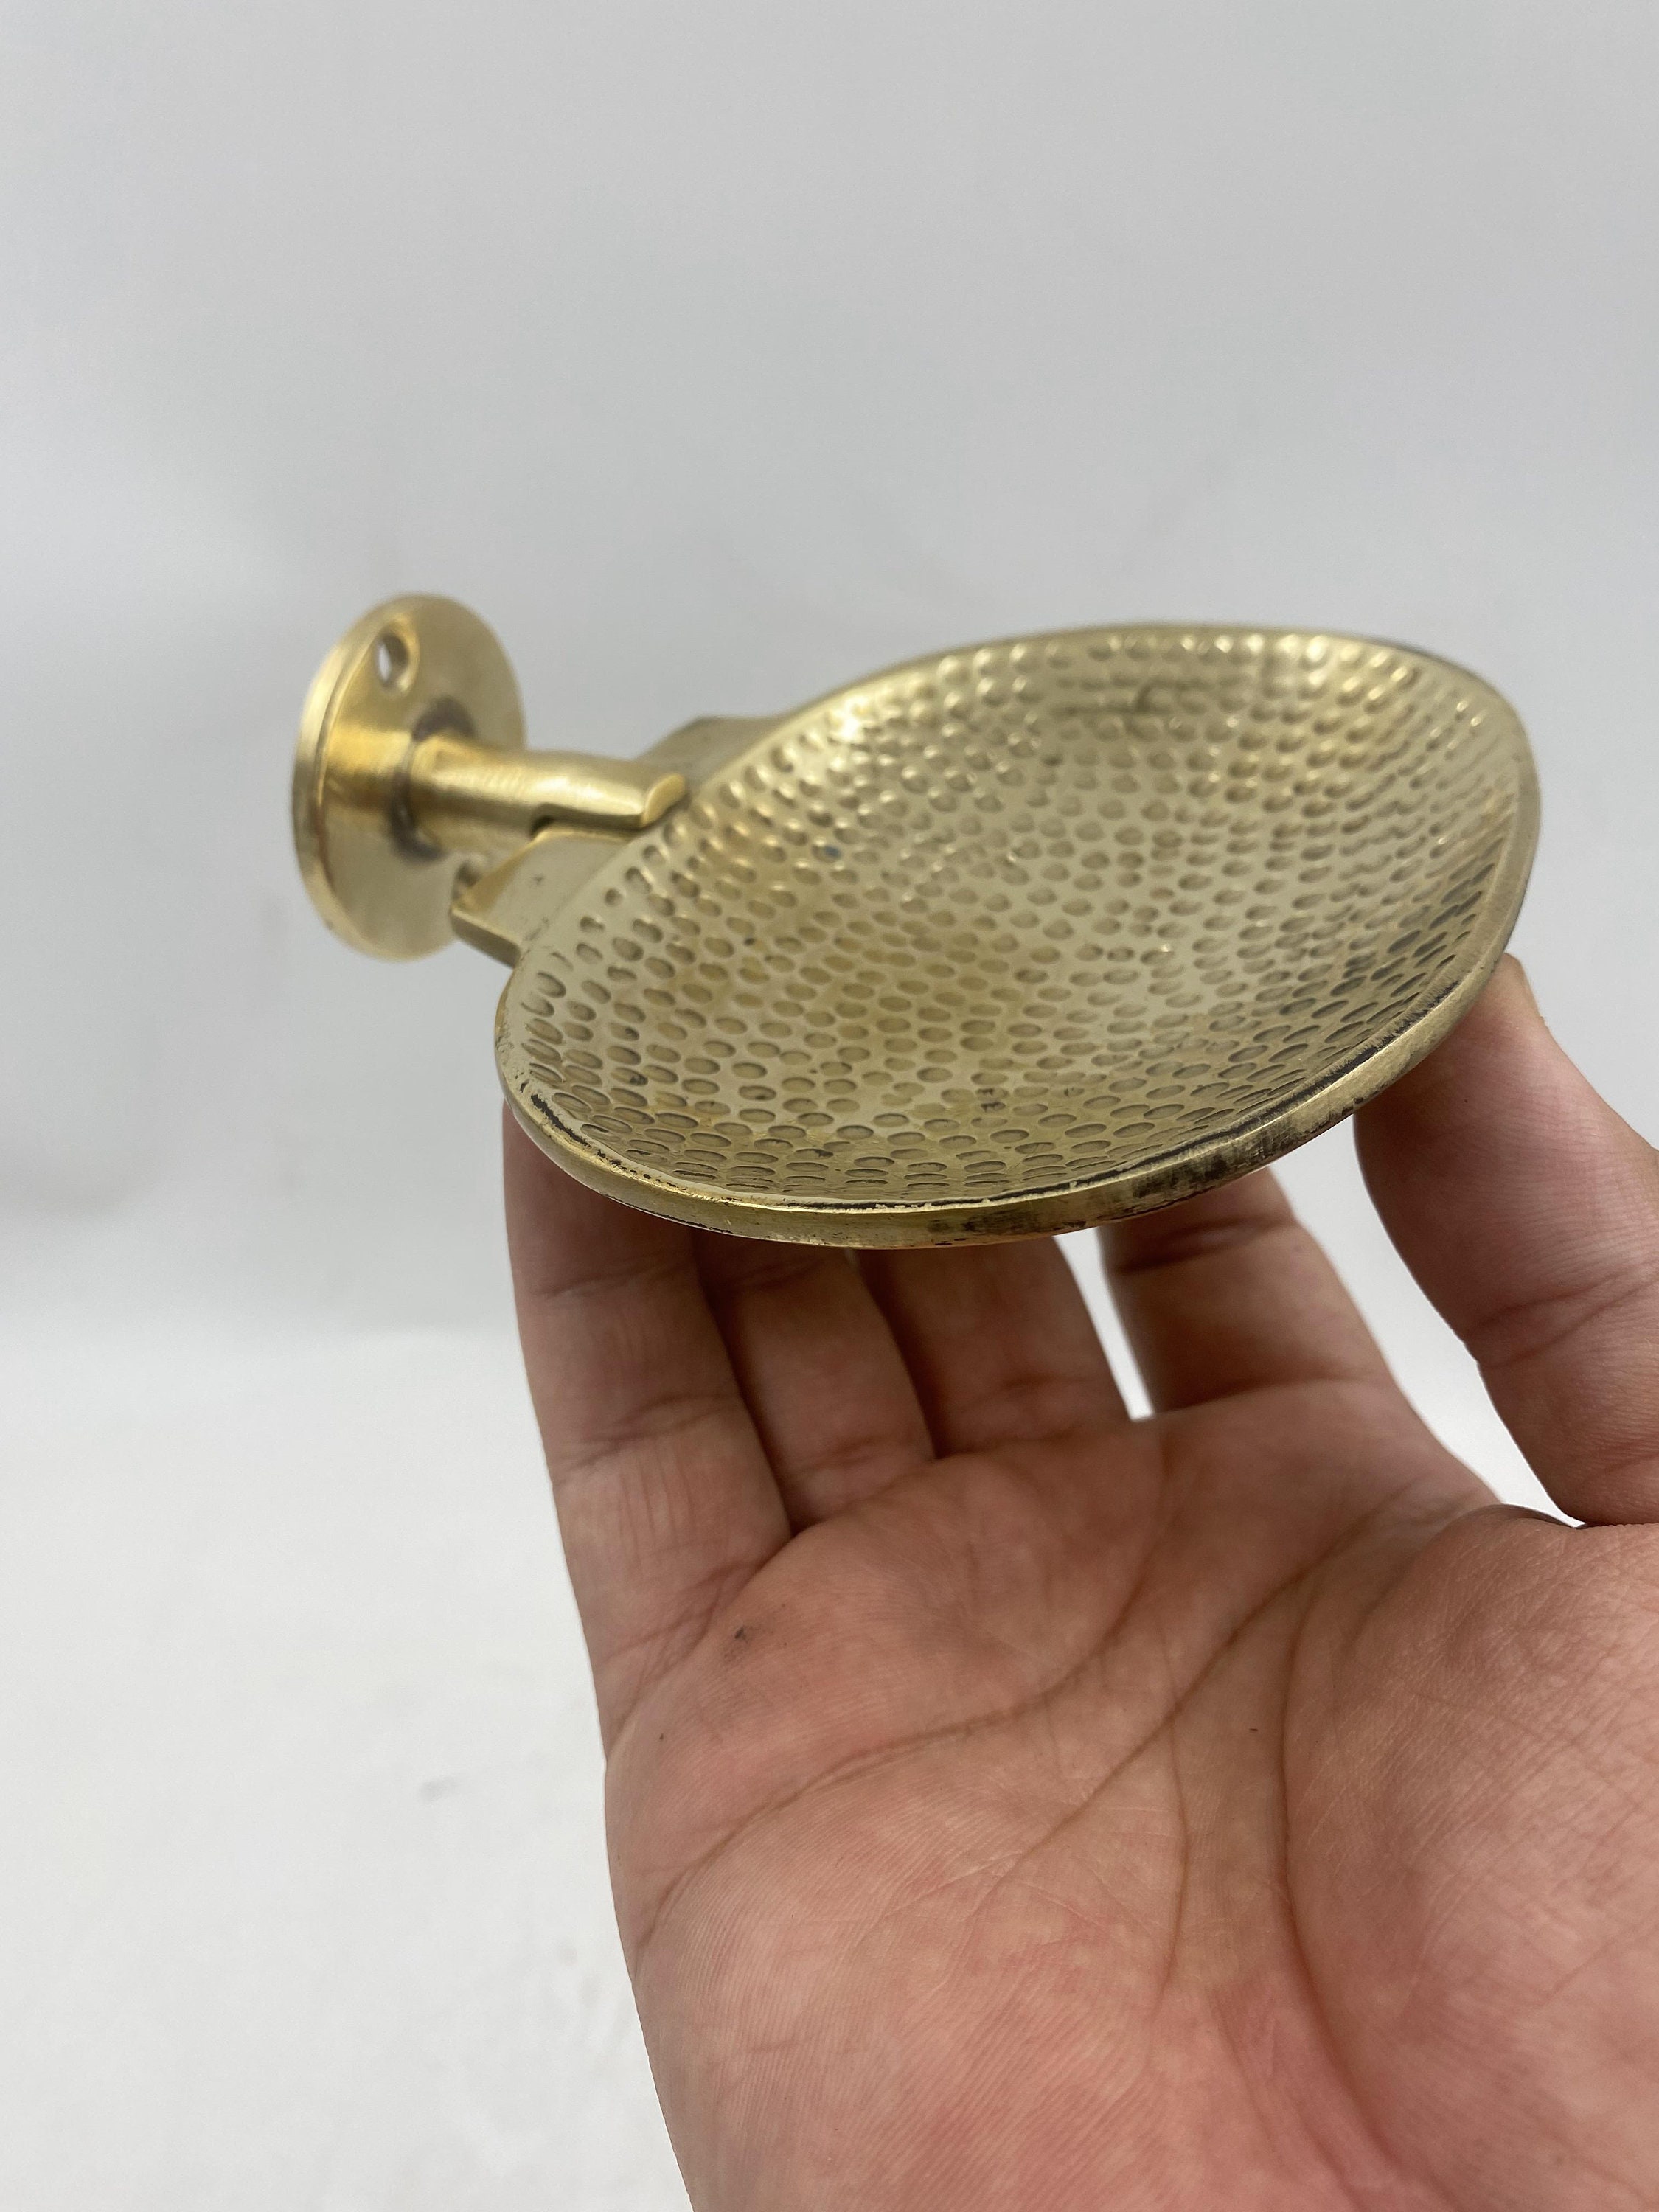 LTJ Modern Shower Wall Mounted Brass Draining Soap Dish